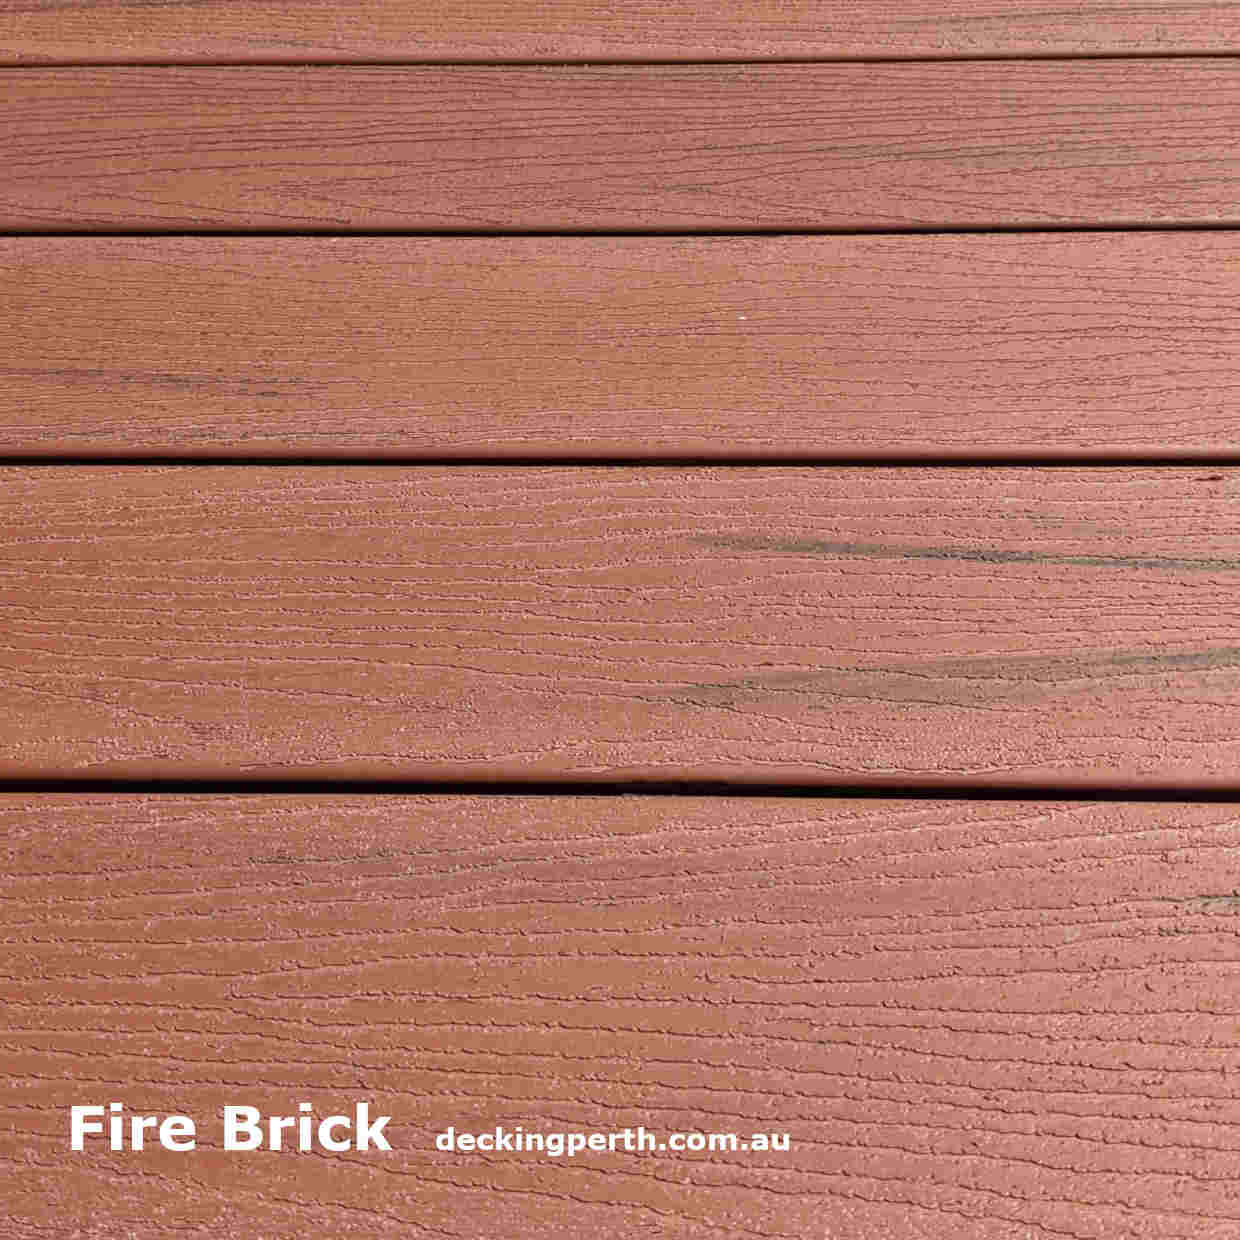 Fire_Brick_decking_perth